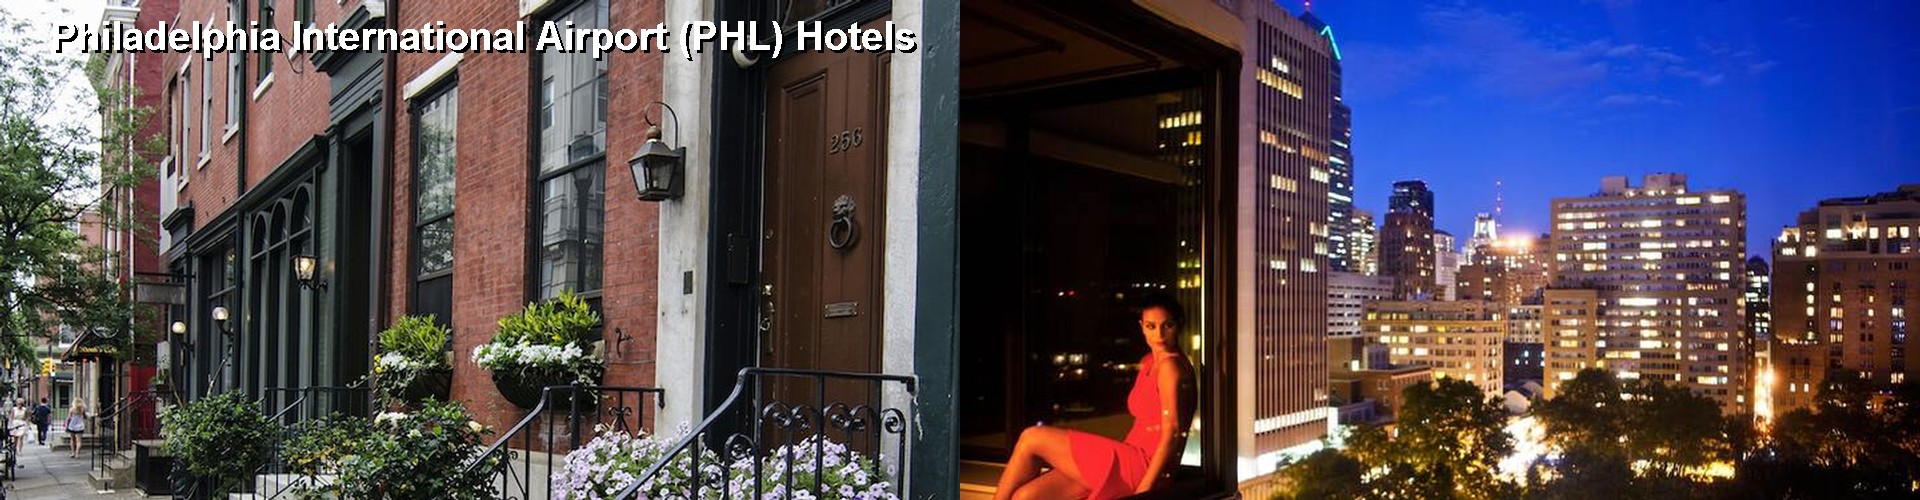 5 Best Hotels near Philadelphia International Airport (PHL)